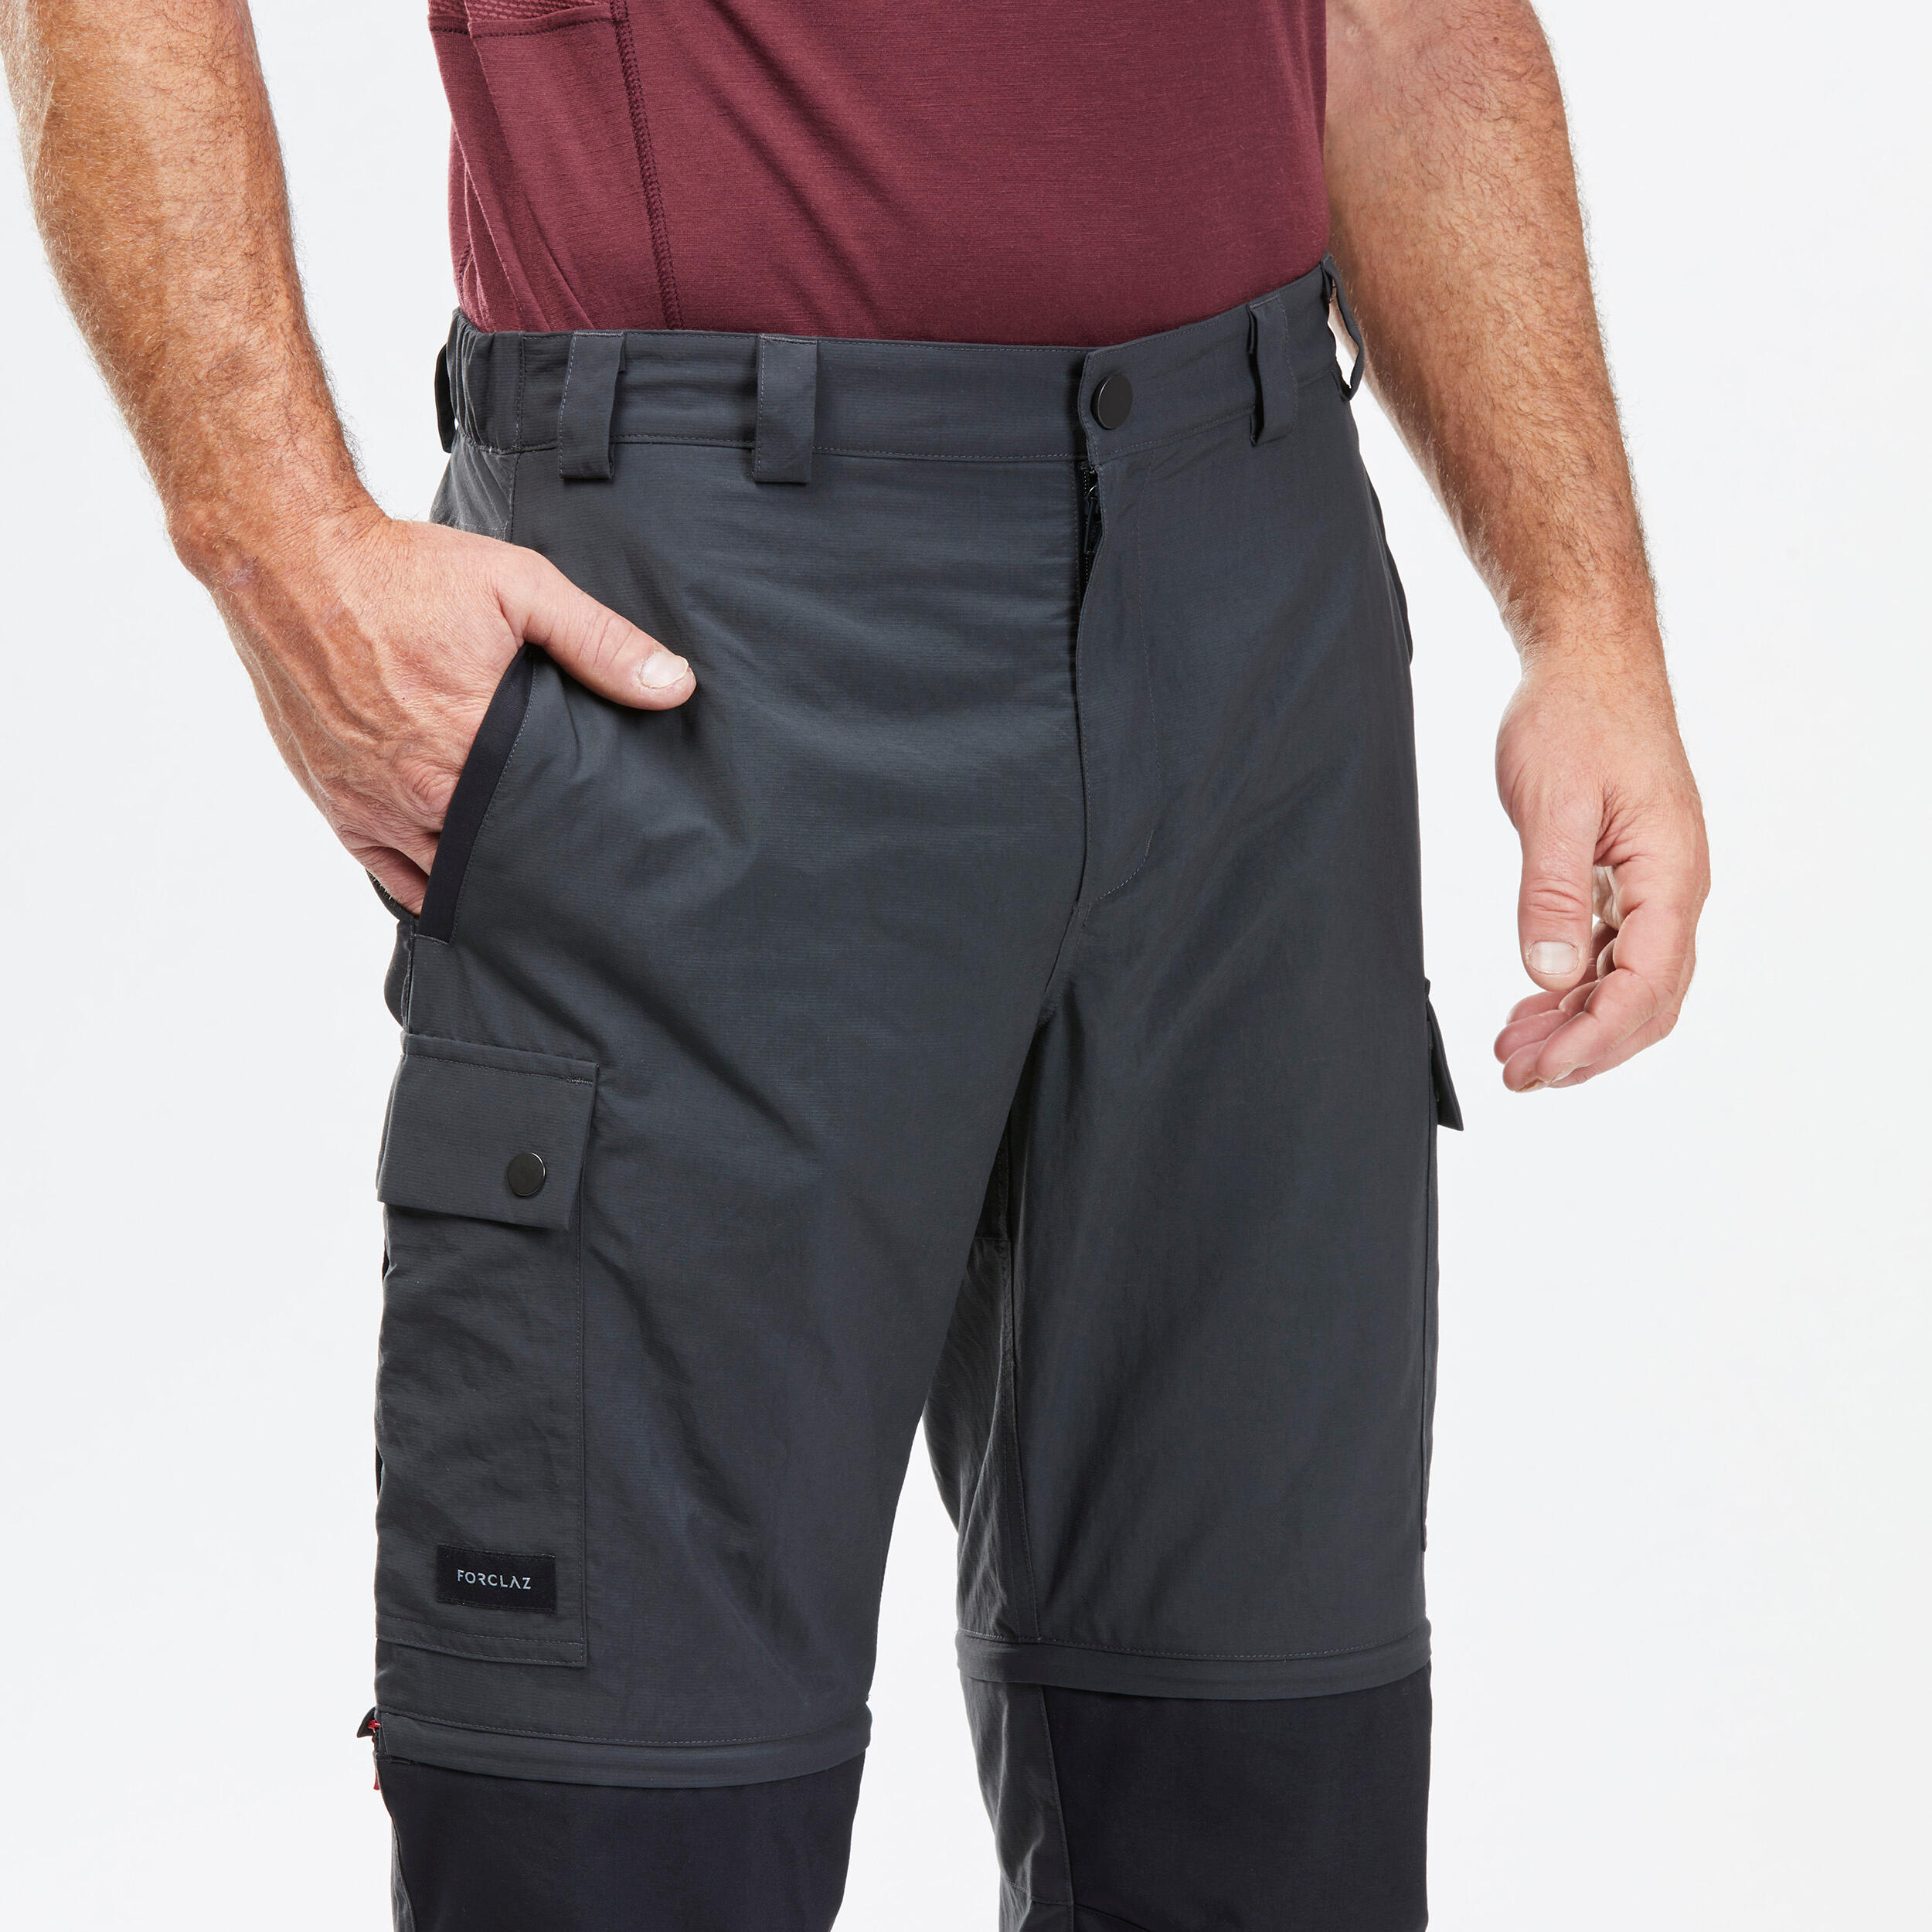 Decathlon Quechua Grey Light Weight Walking Trousers Size 32W 32L | eBay